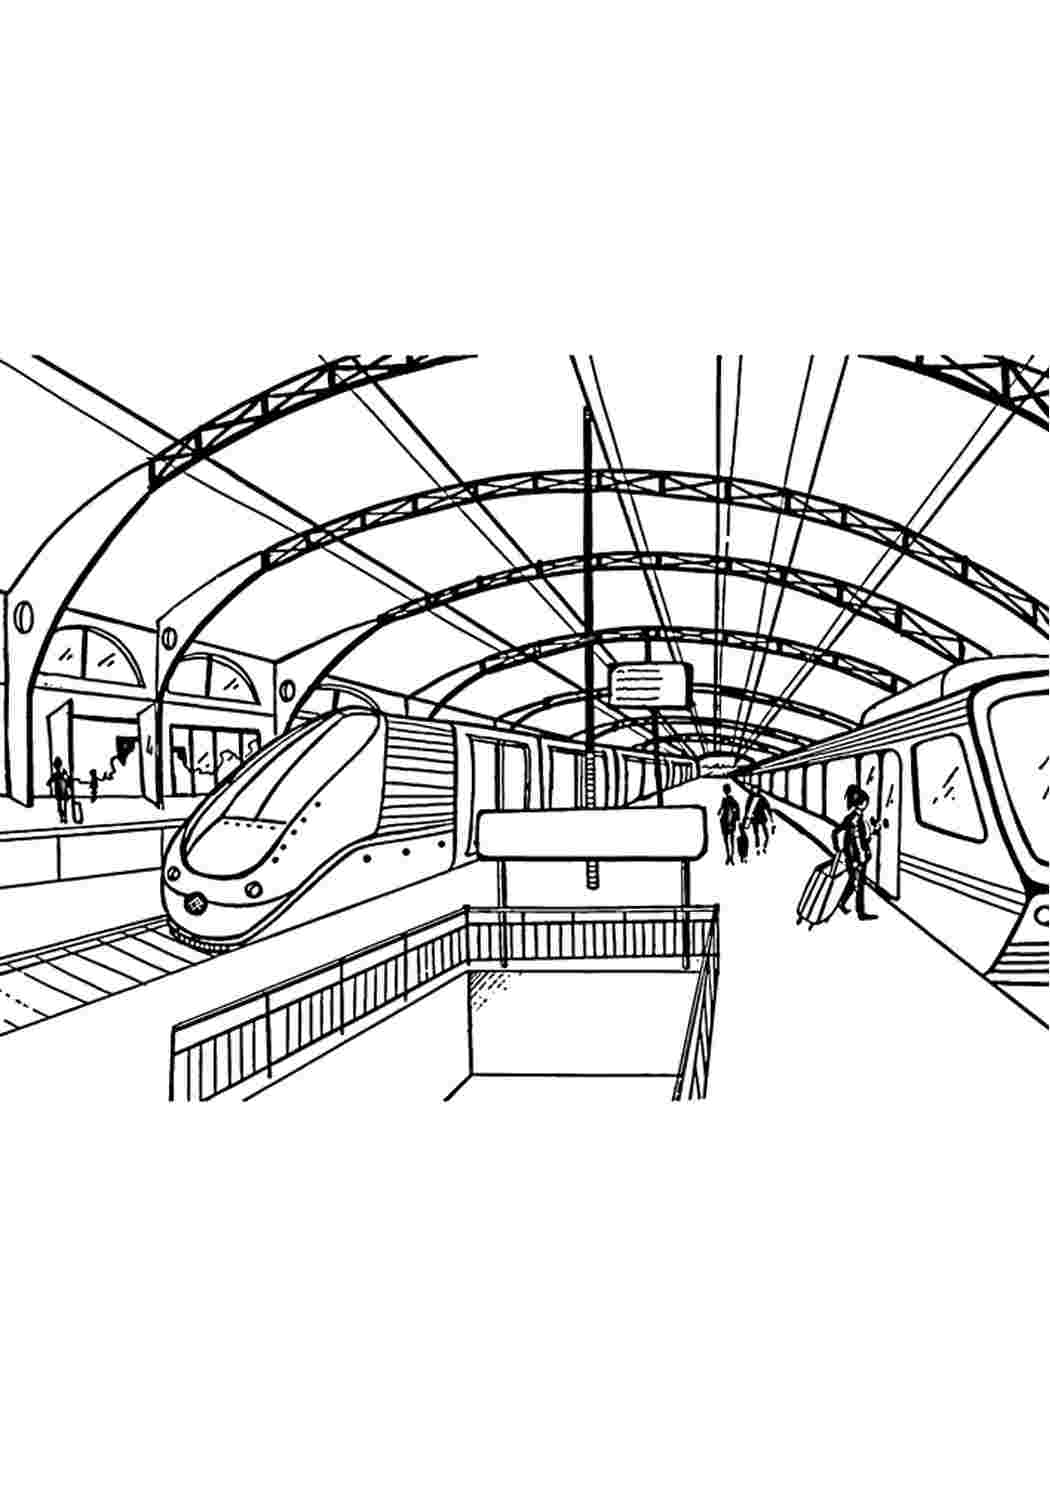 Как нарисовать метро легко